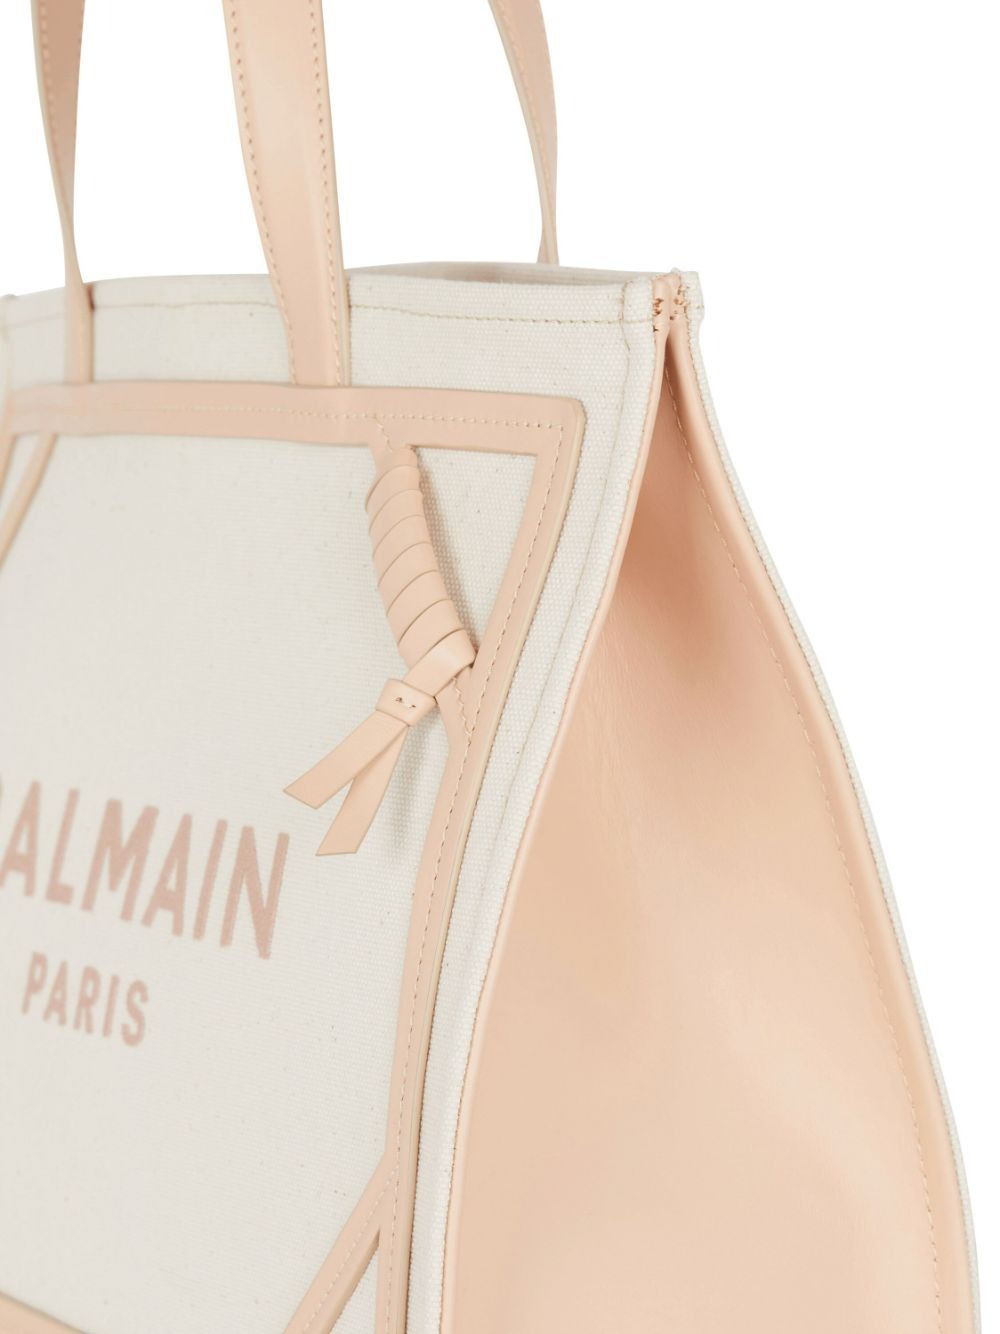 Balmain B-Army Shopper Medium Tote Bag in Creme/Nude Rose